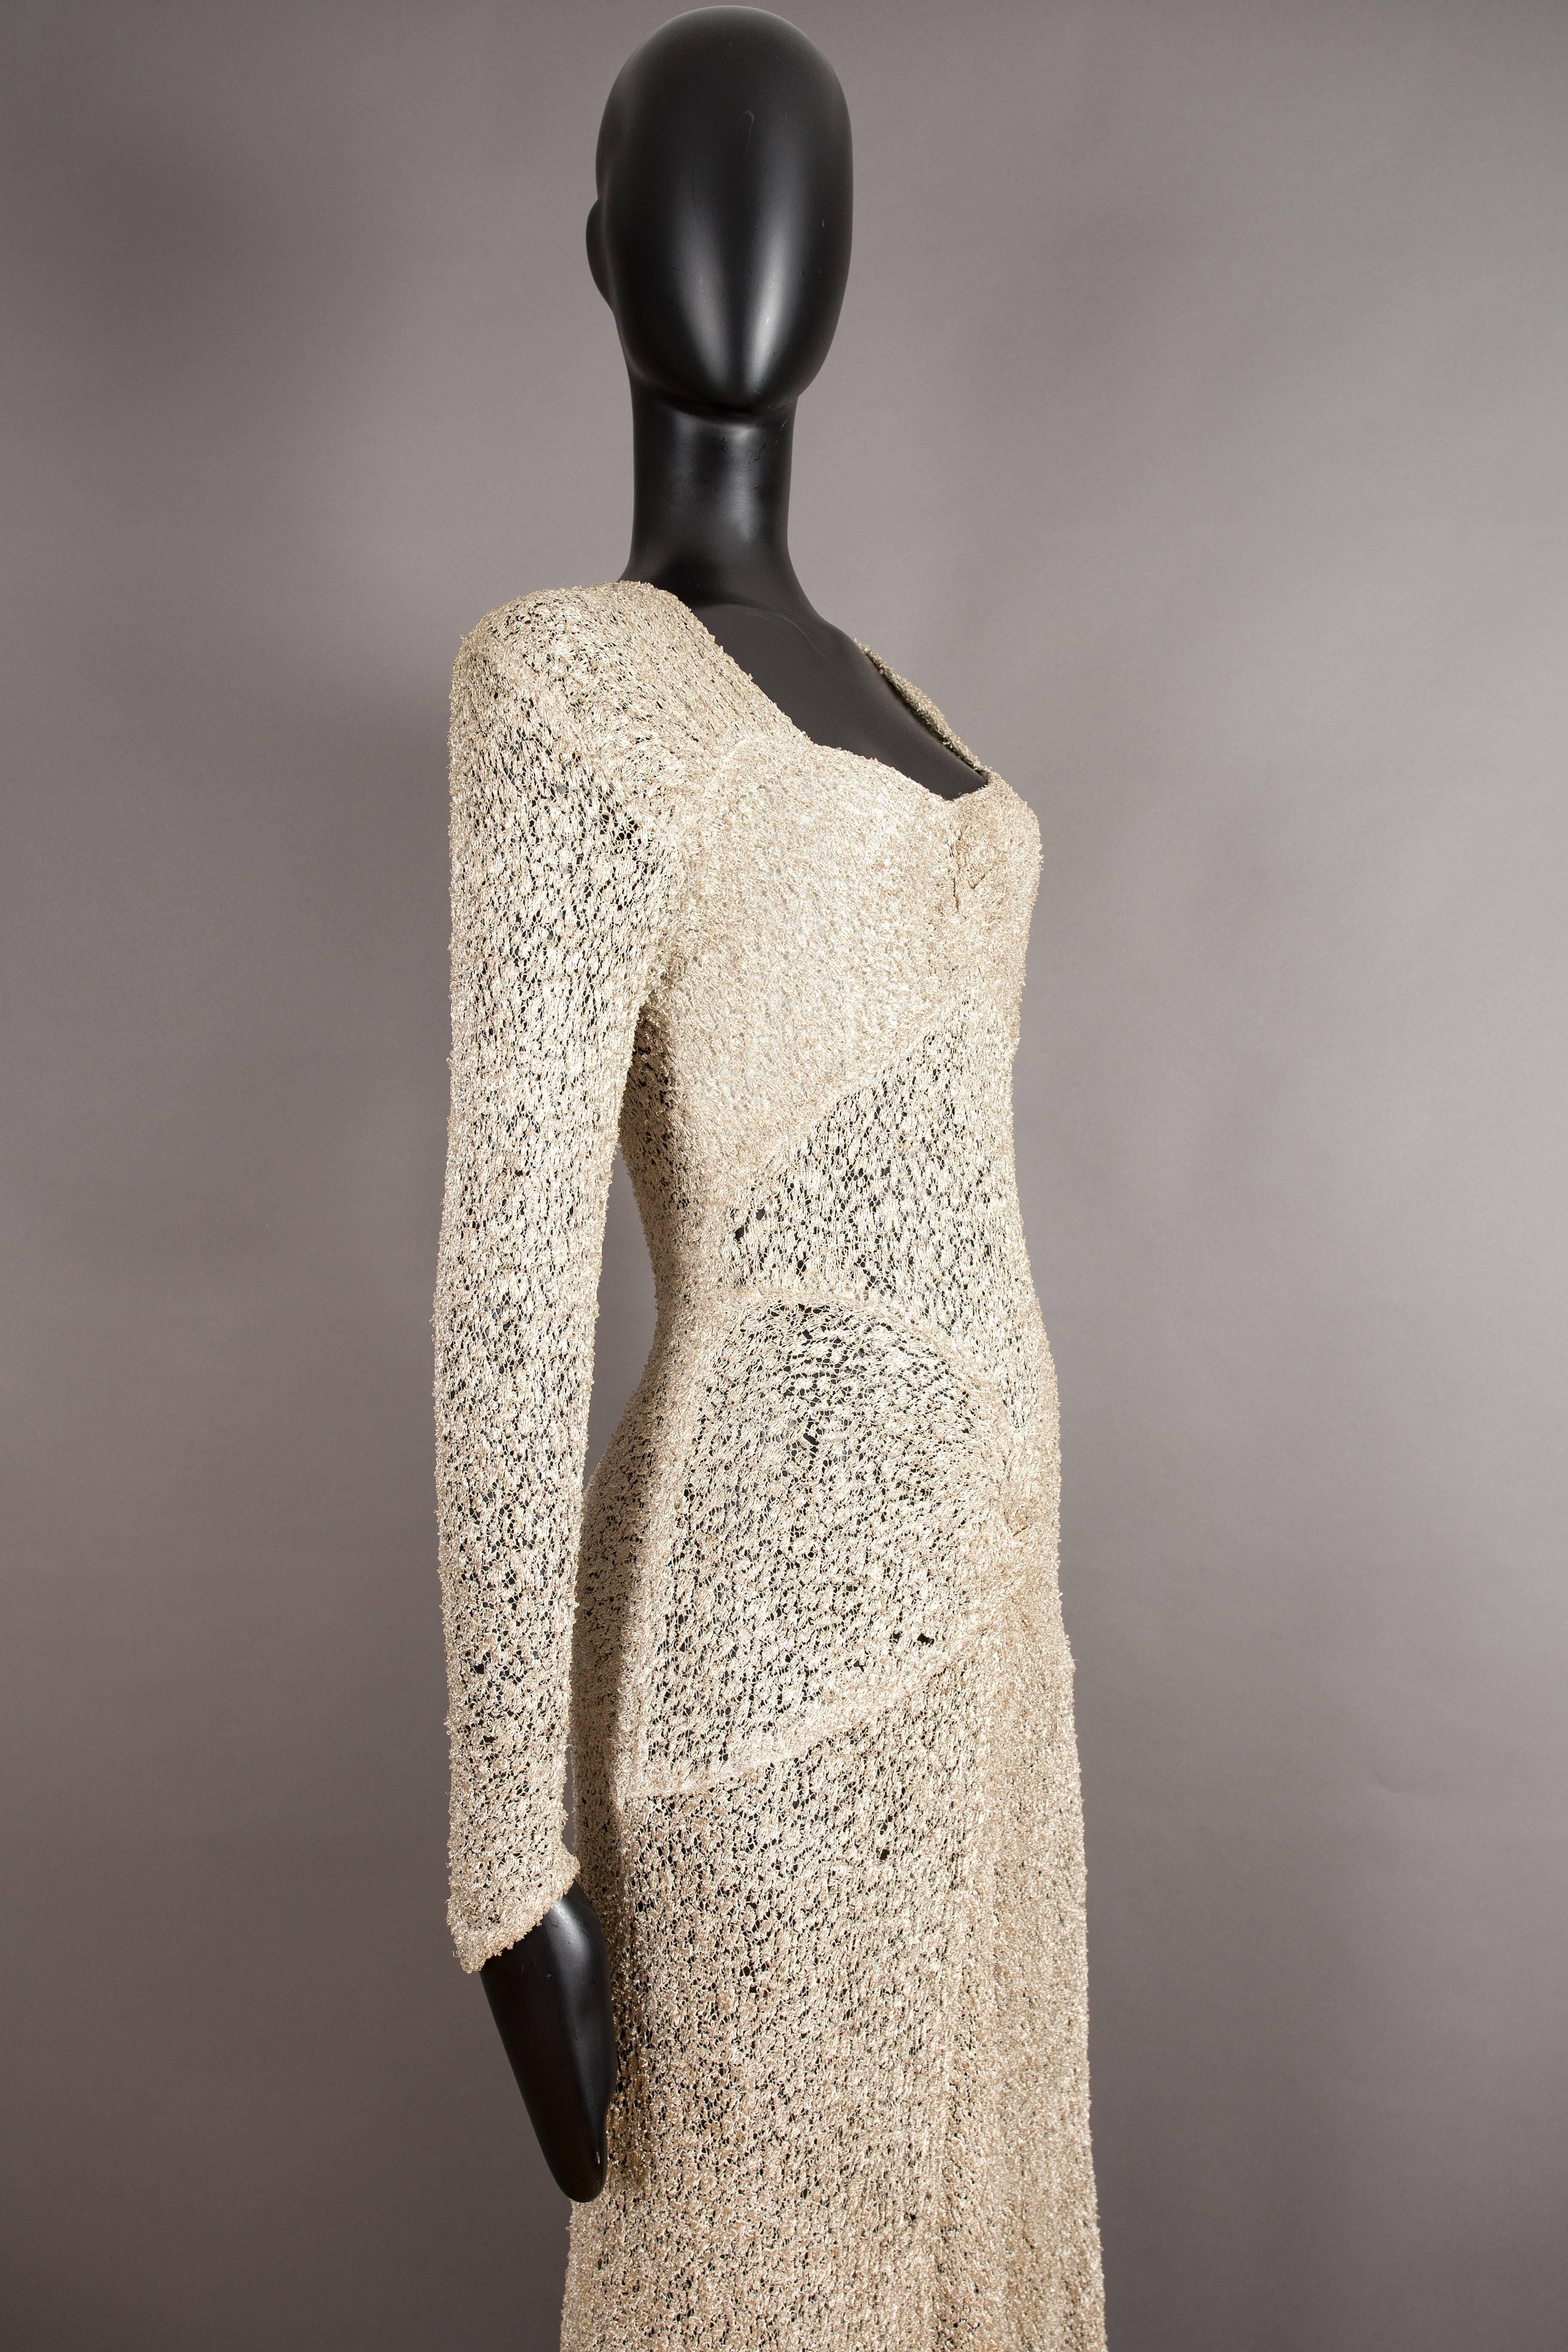 Brown Ann Dawson metallic ivory lame lace knit evening dress, circa 1930s